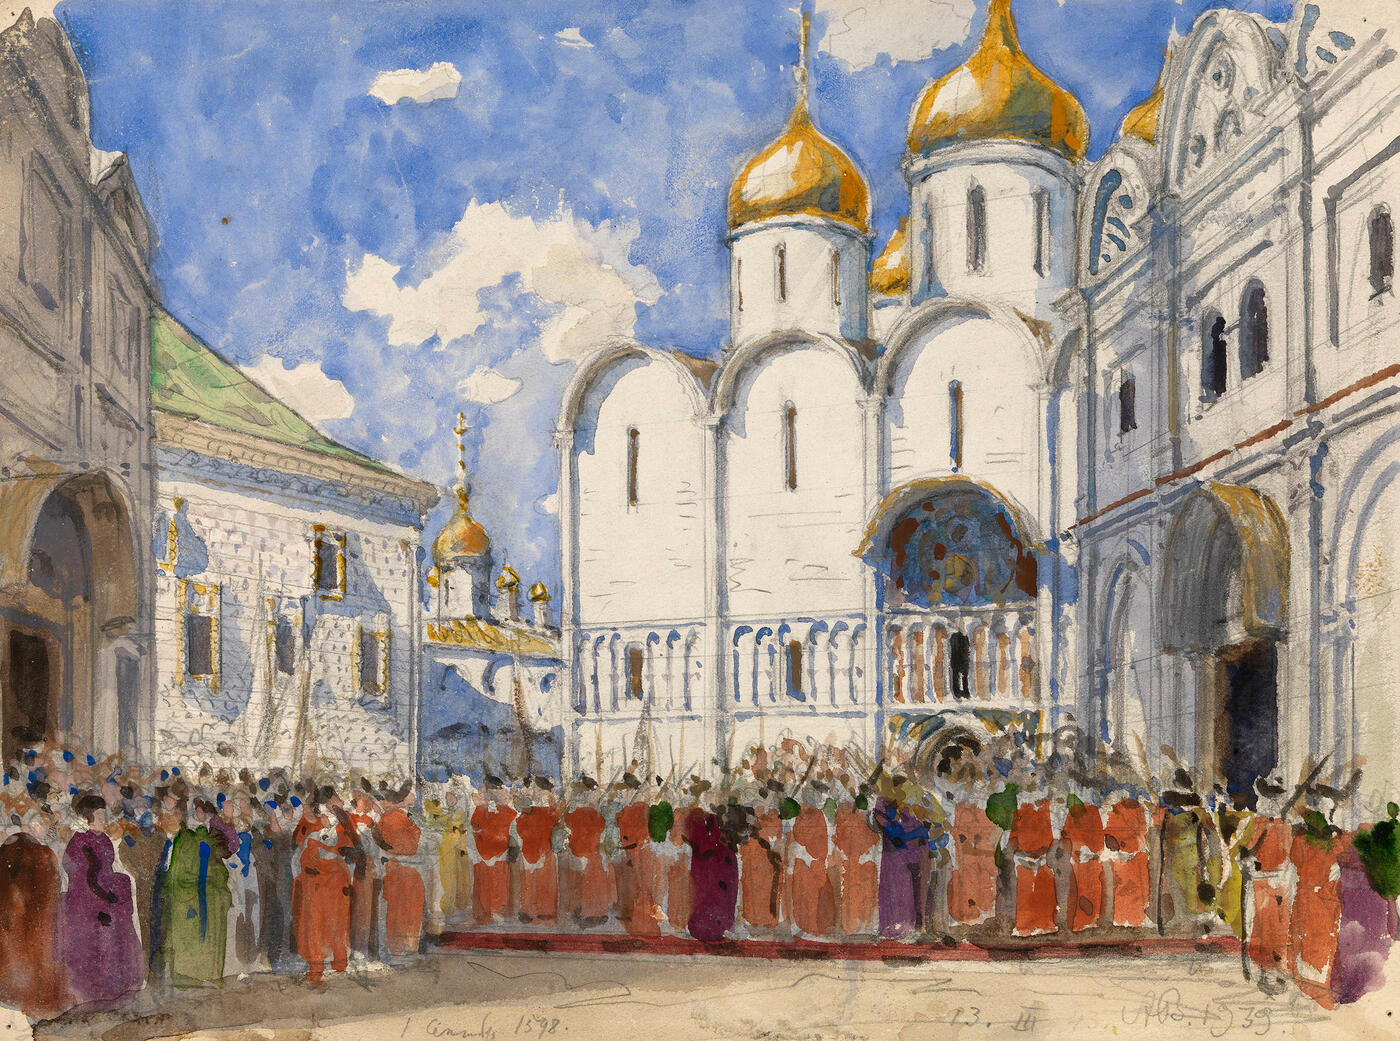 Set Design for the Coronation Scene from "Boris Godunov",